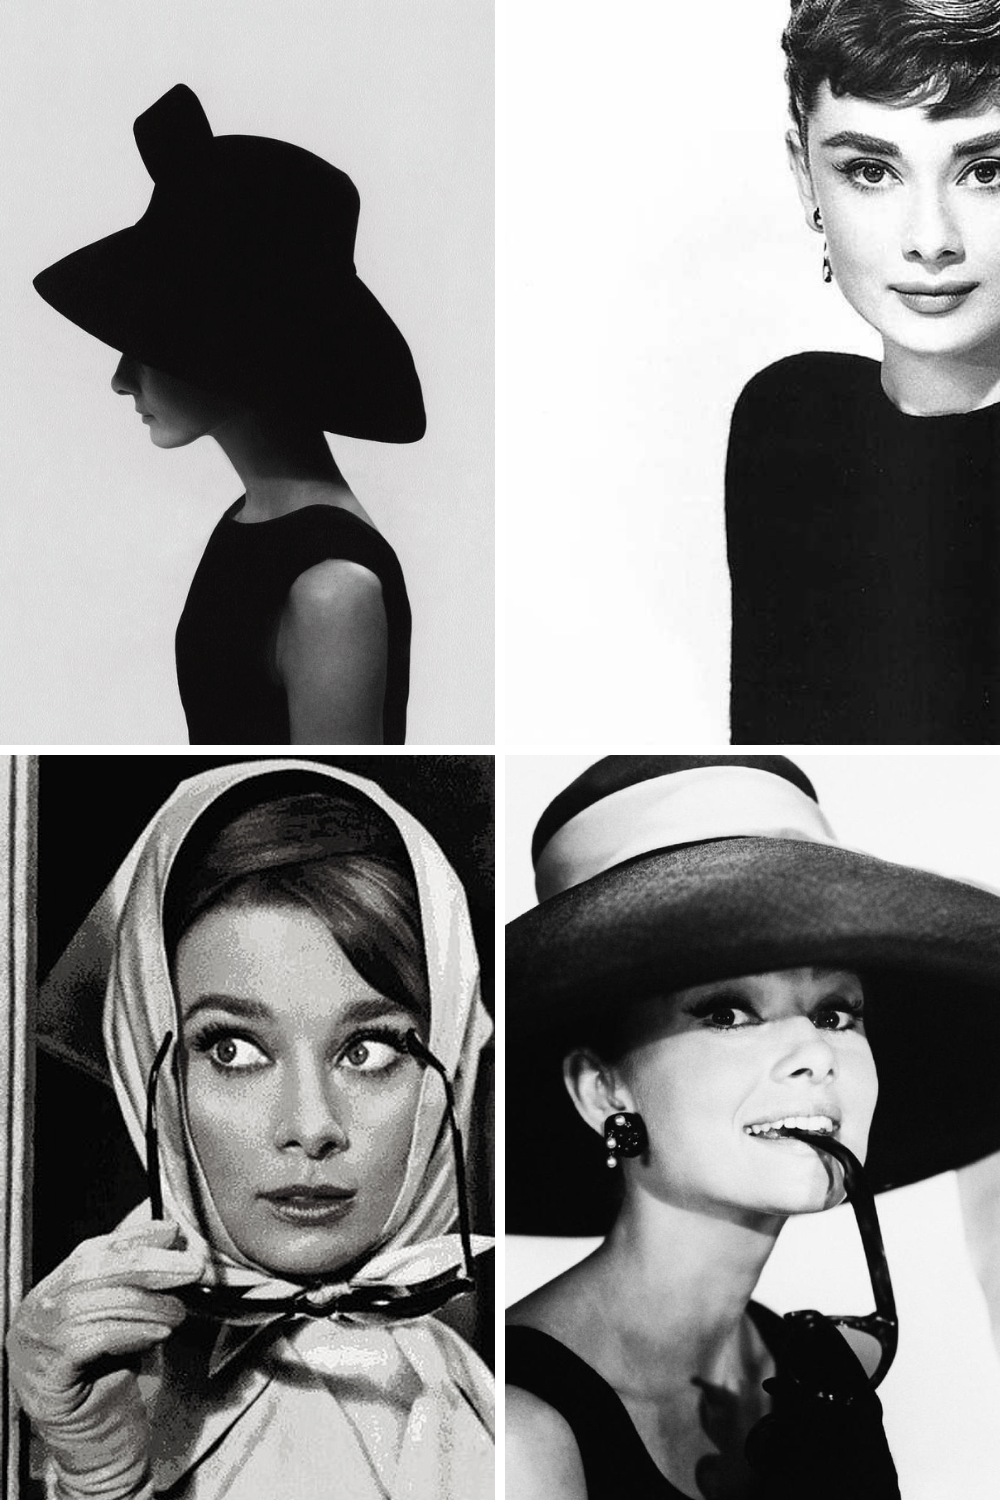 Audrey Hepburn Inspired Self-Portrait — Heart take the Wheel